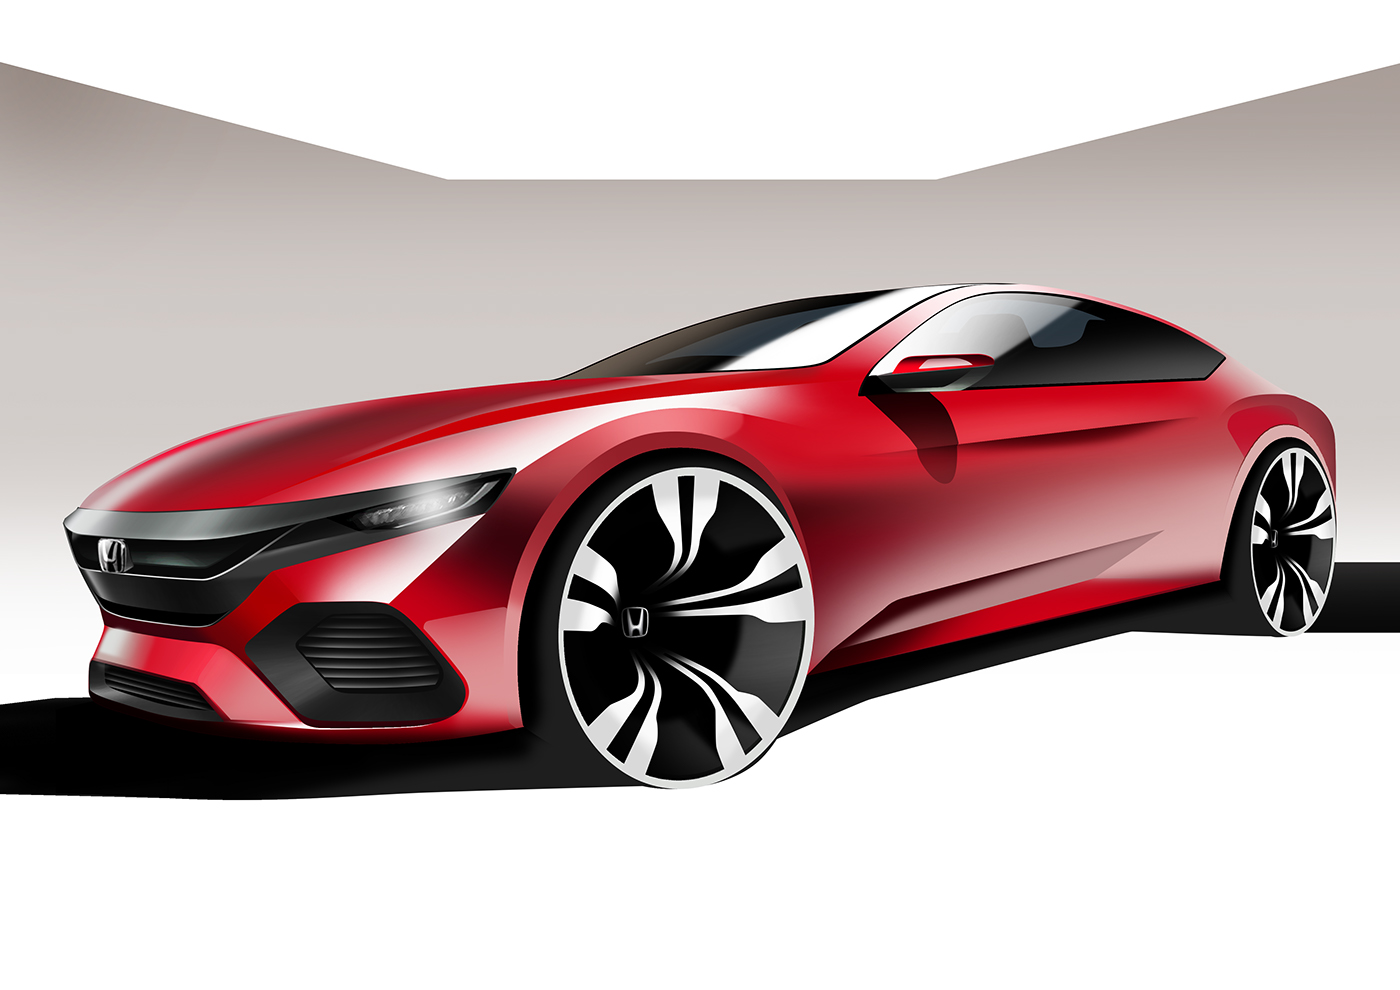 opel sketch rendering tata Honda MG FERRARI supercar rolls royce Nissan